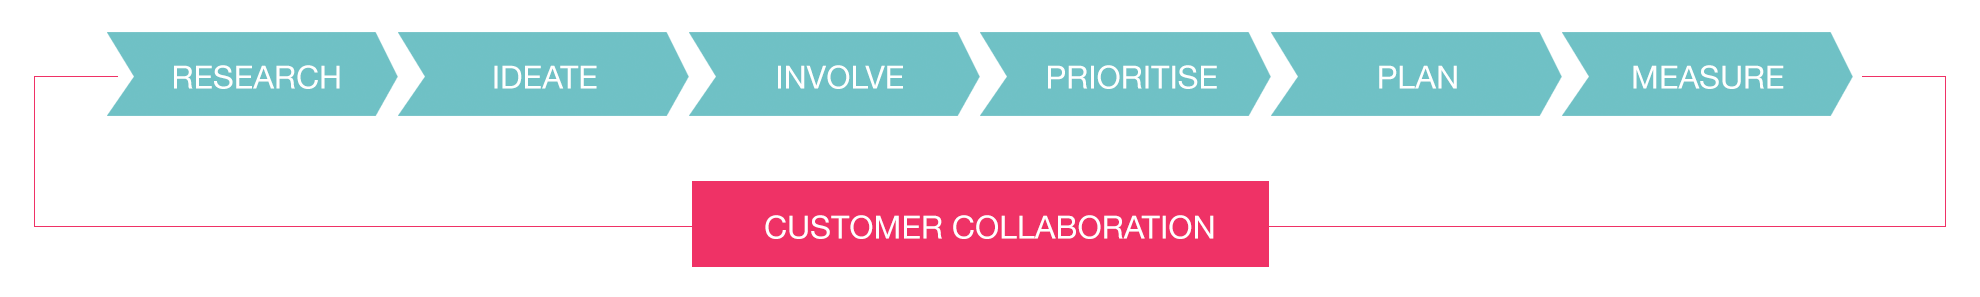 Customer-Lead Innovation Flow Chart